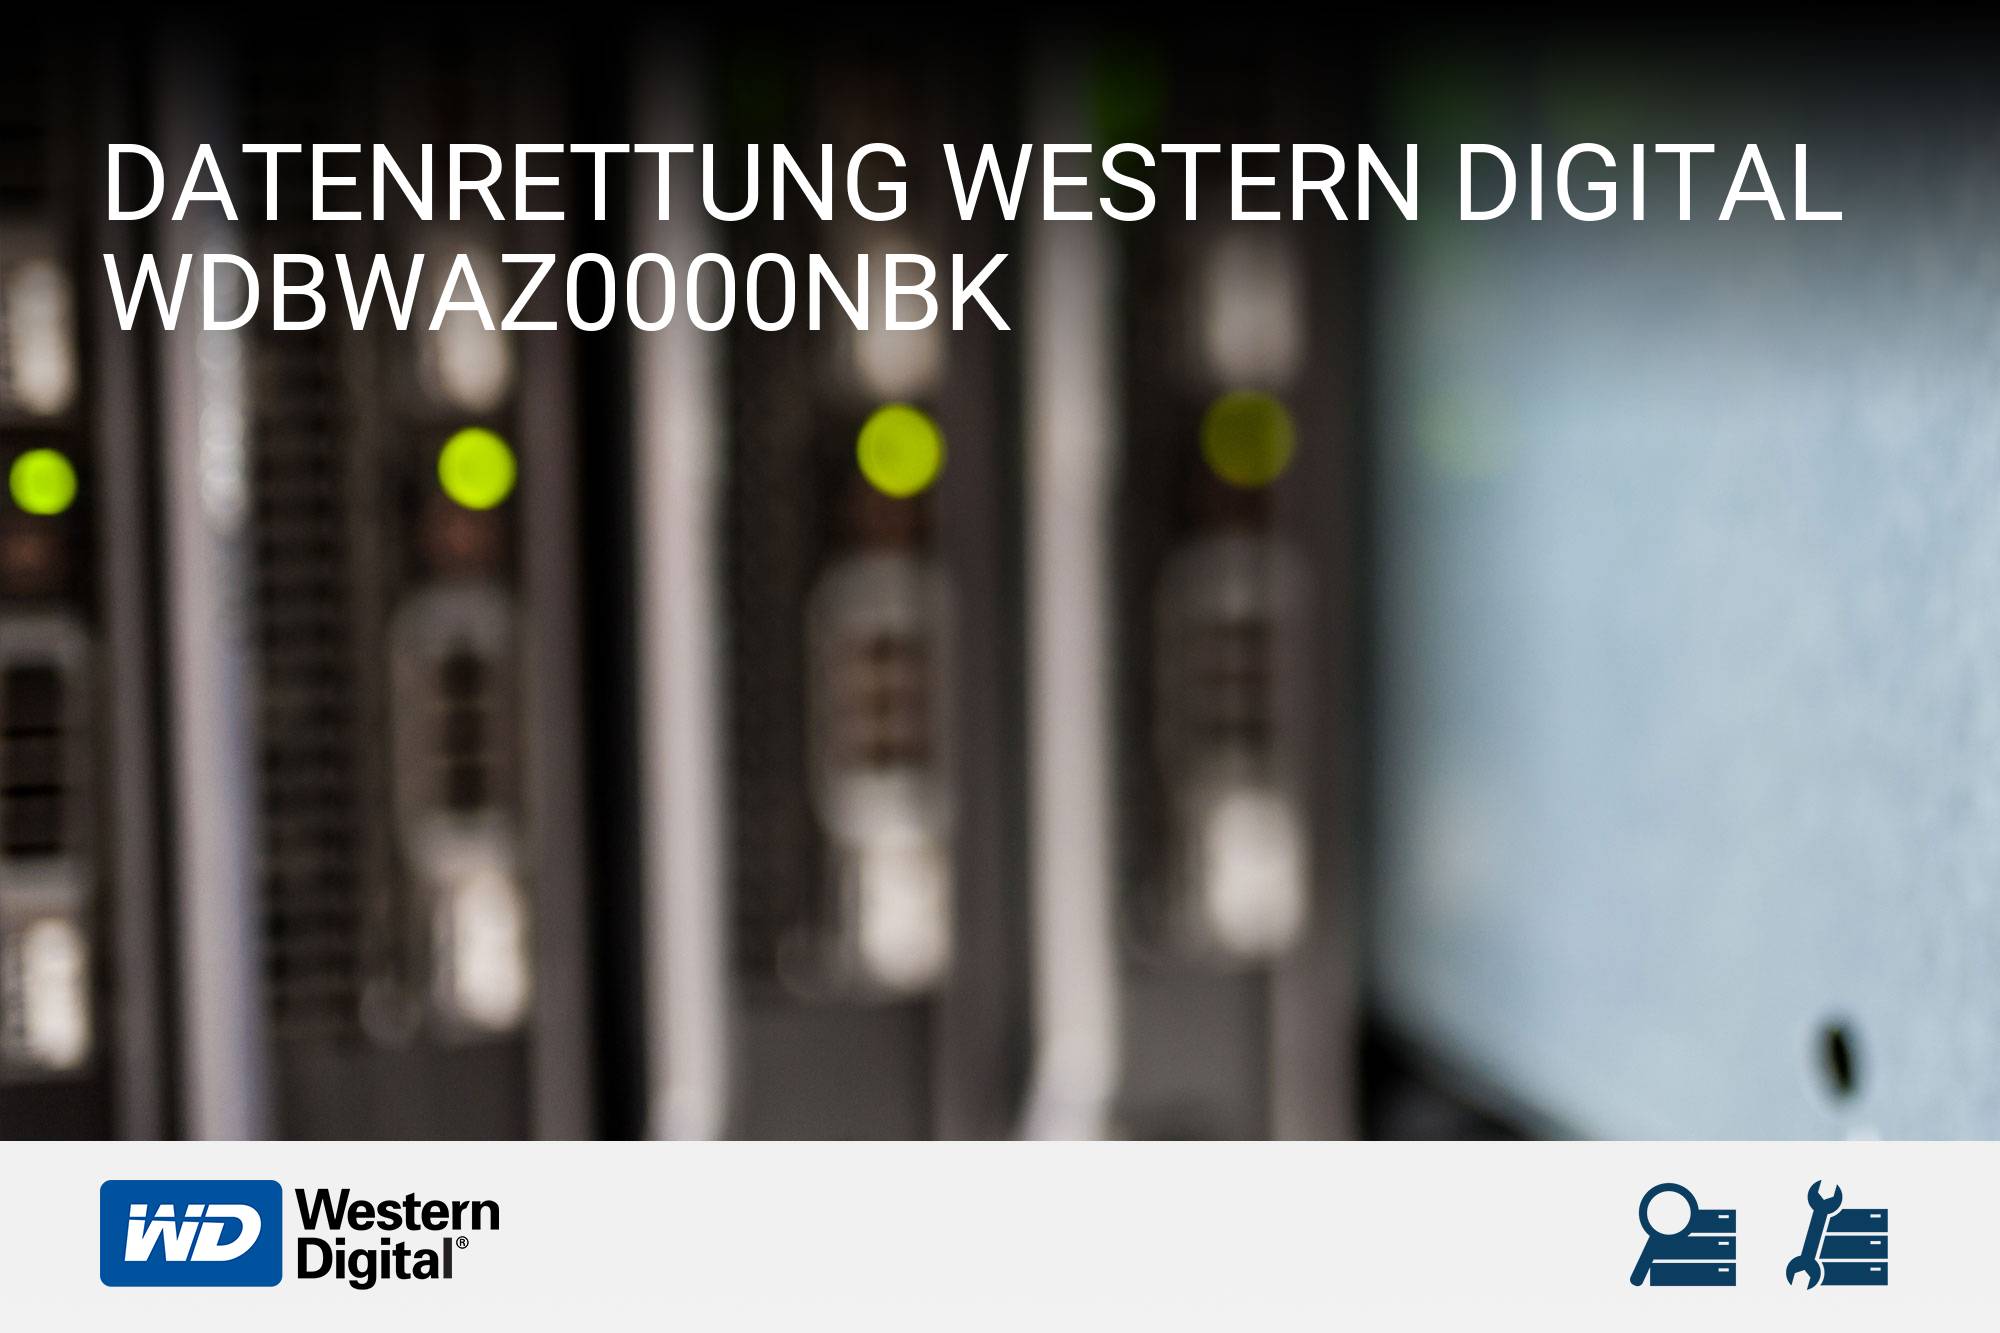 Western Digital WDBWAZ0000NBK